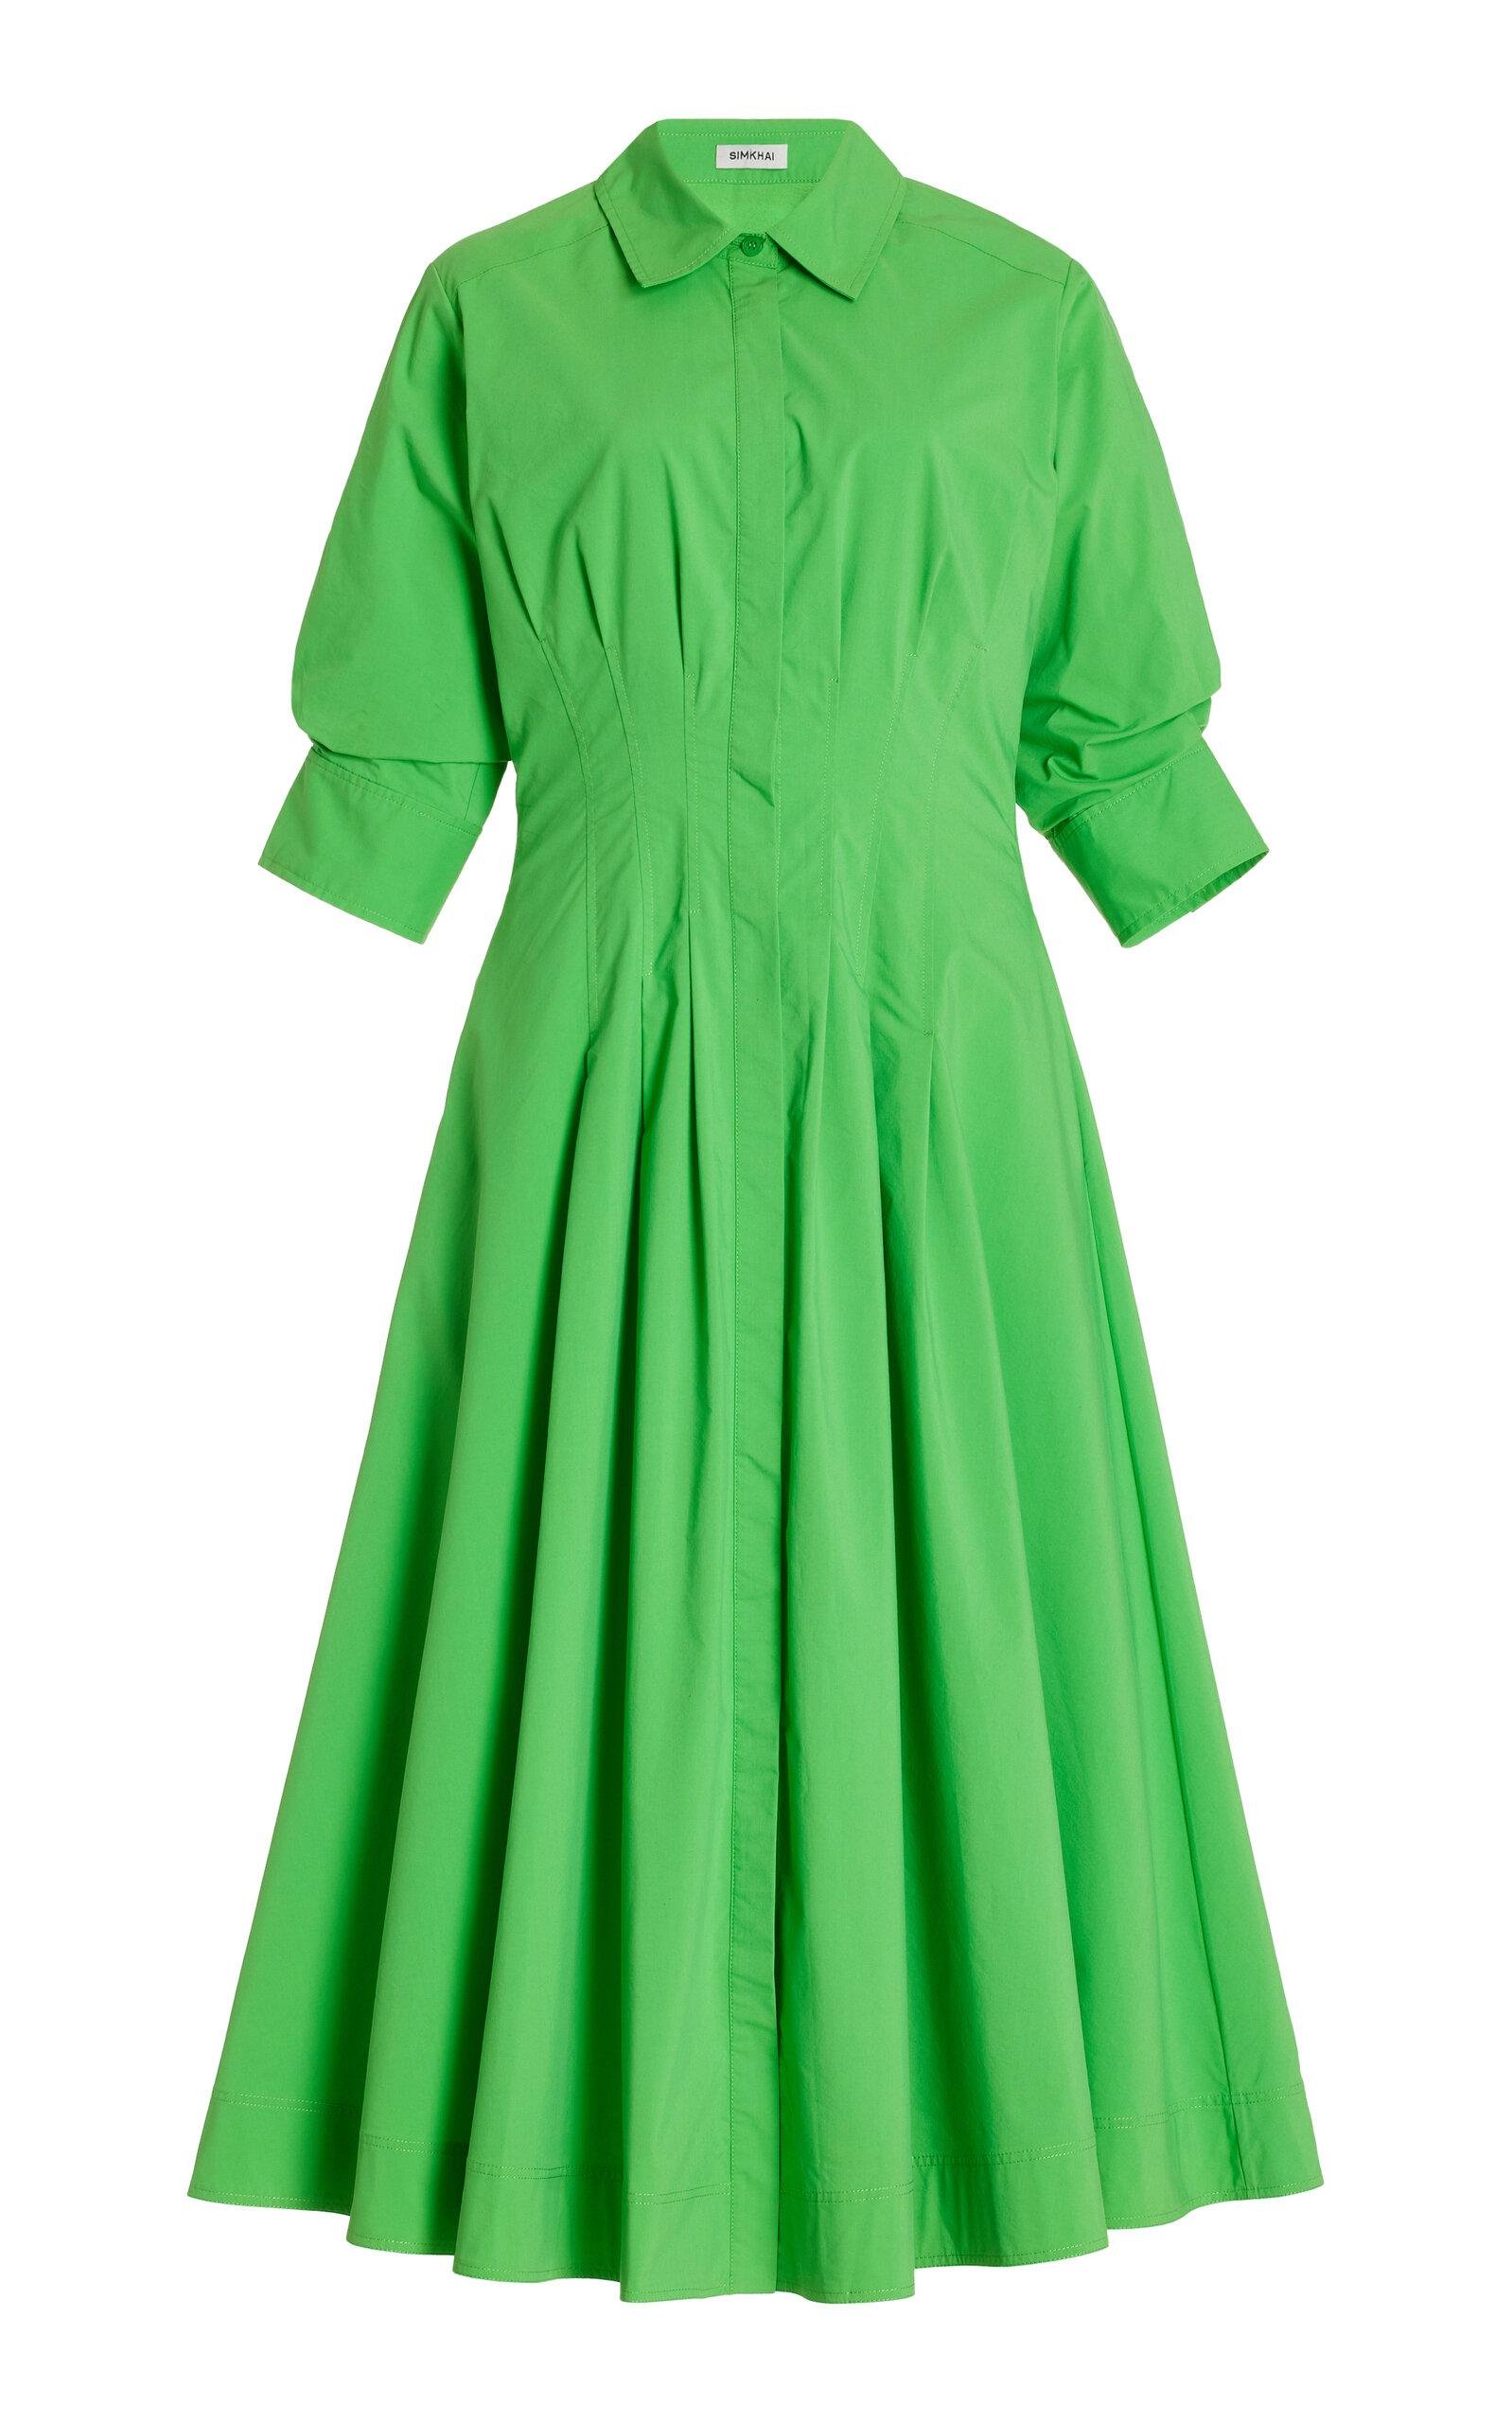 SIMKHAI - Jazz Pintucked Cotton-Blend Midi Shirt Dress - Green - S - Moda Operandi by SIMKHAI